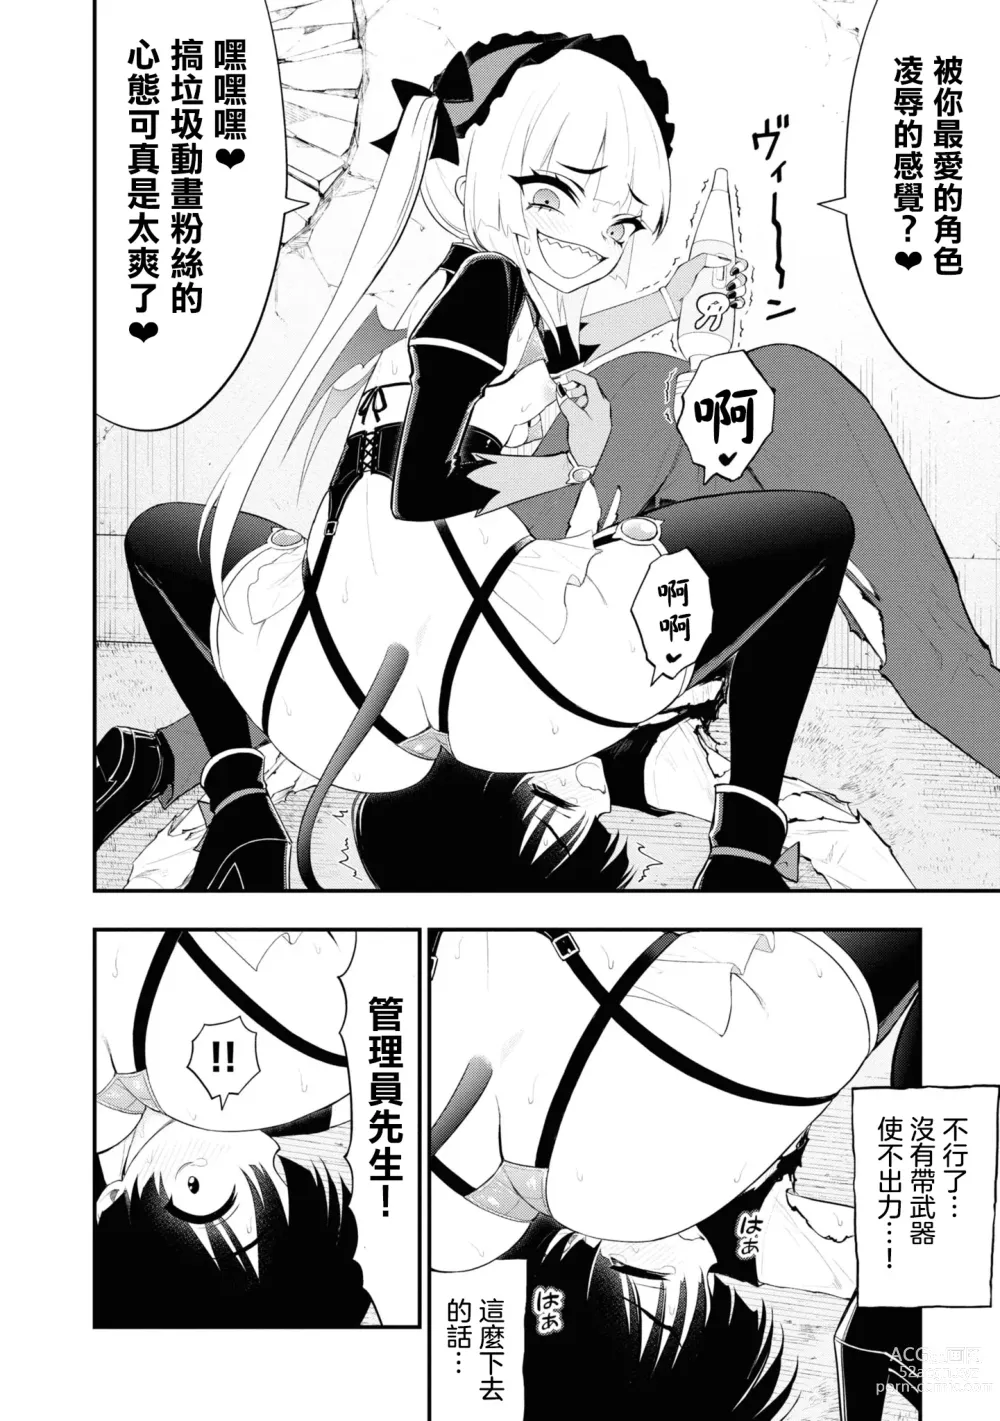 Page 46 of manga 淫獄小區 15-17話